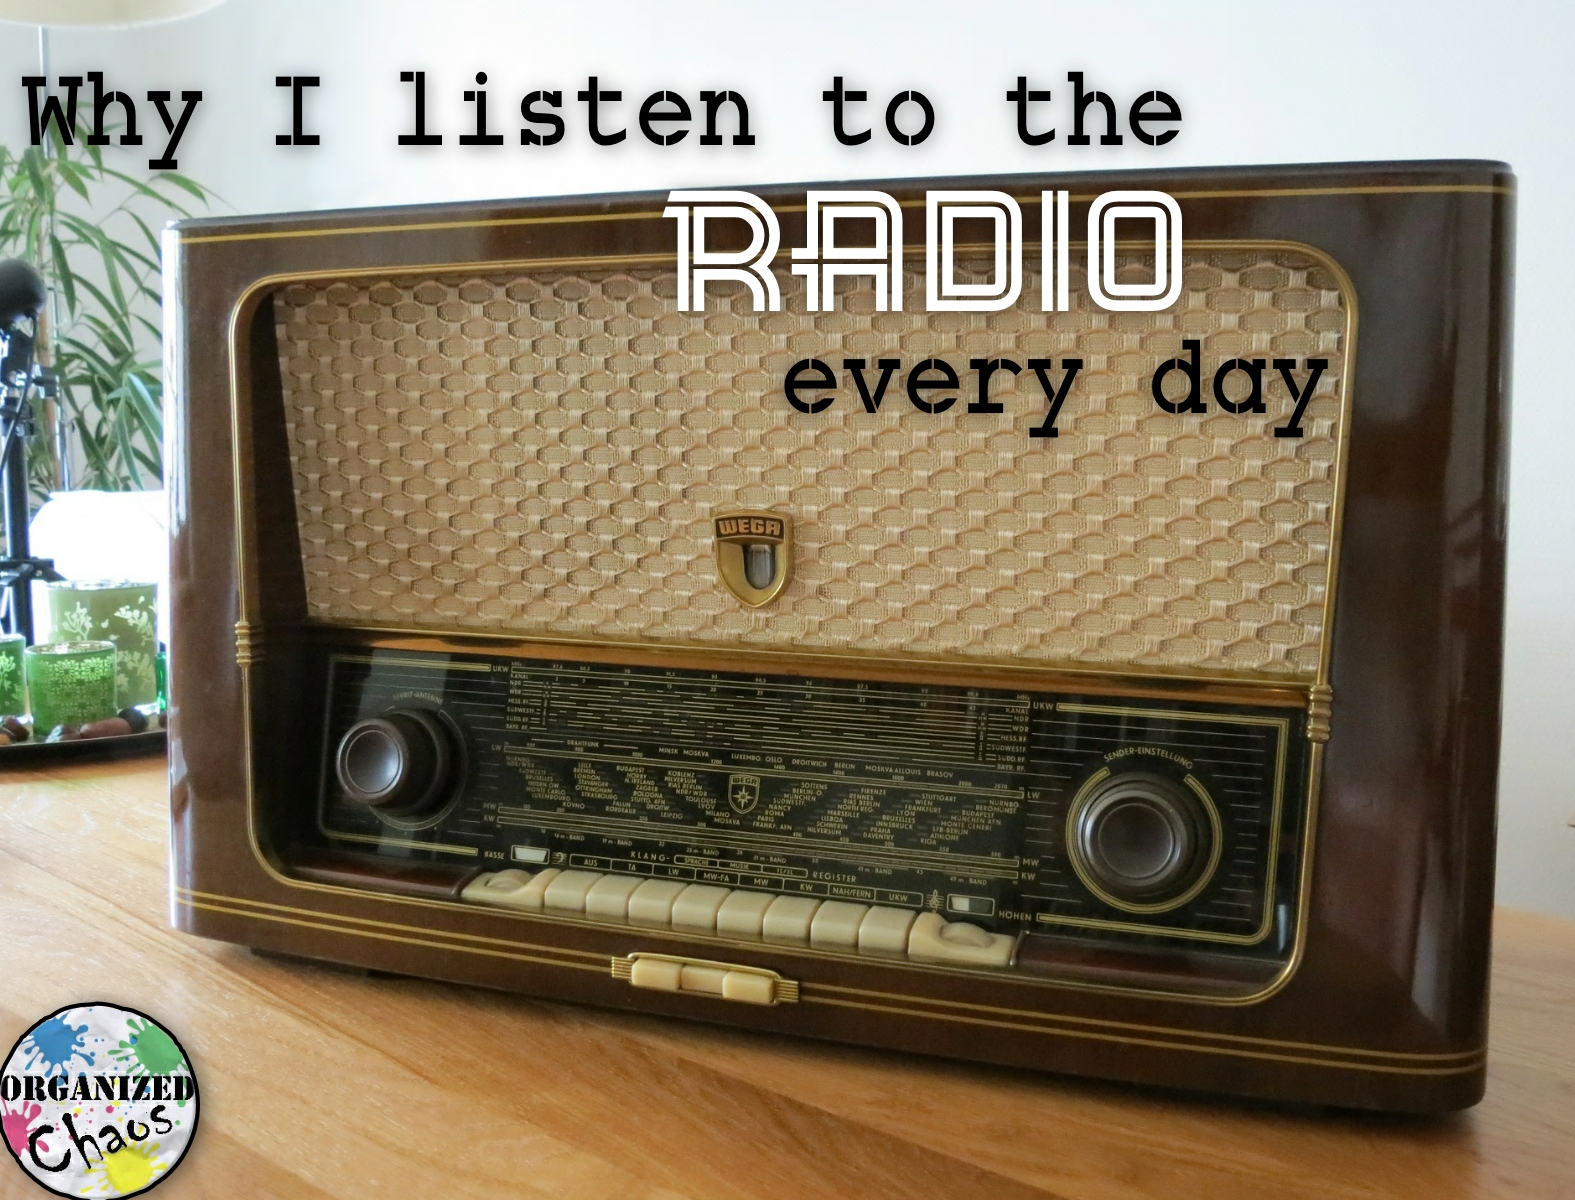 Teacher Tuesday: why I listen to the radio every day | Organized Chaos